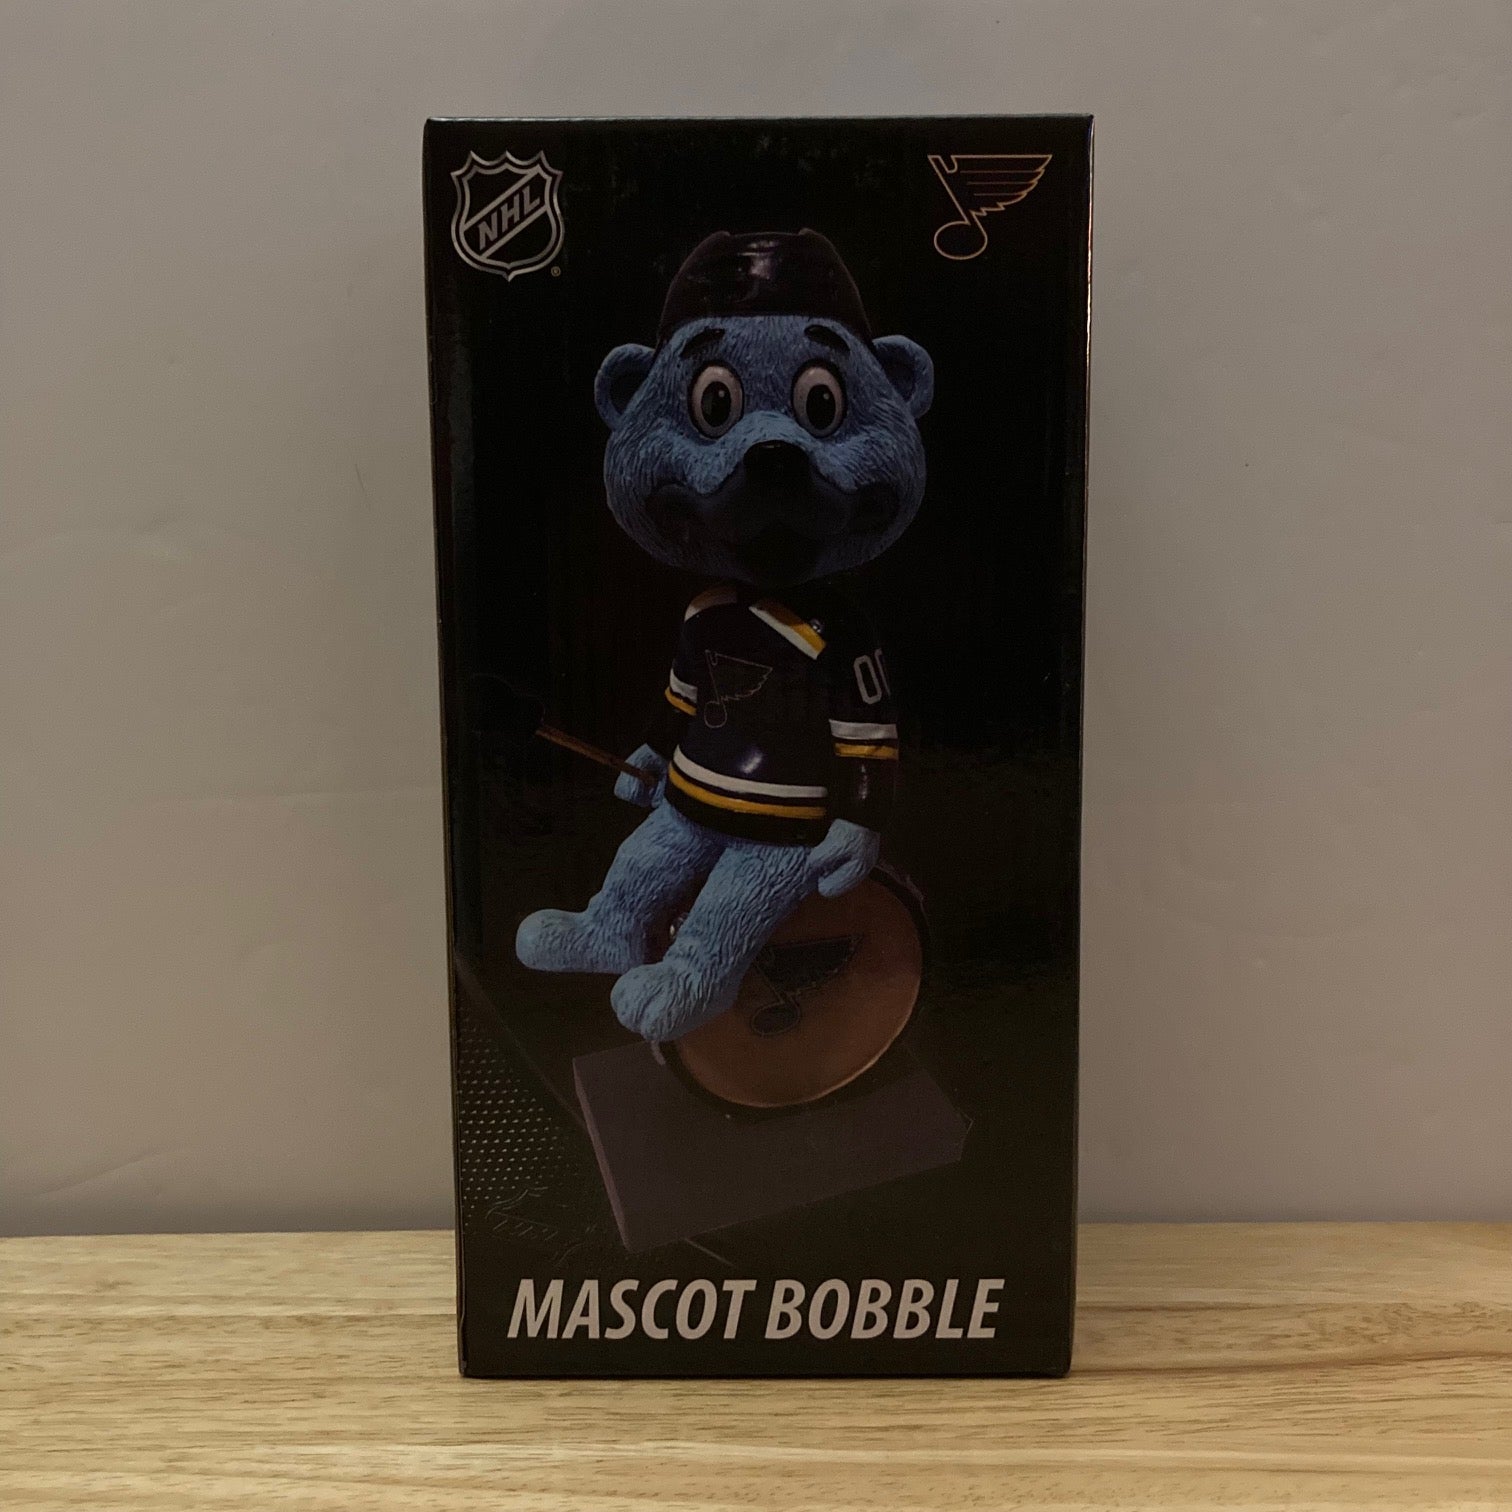 NHL St. Louis Blues Louie Mascot Bobblehead - Louie On Drum (8 inches)